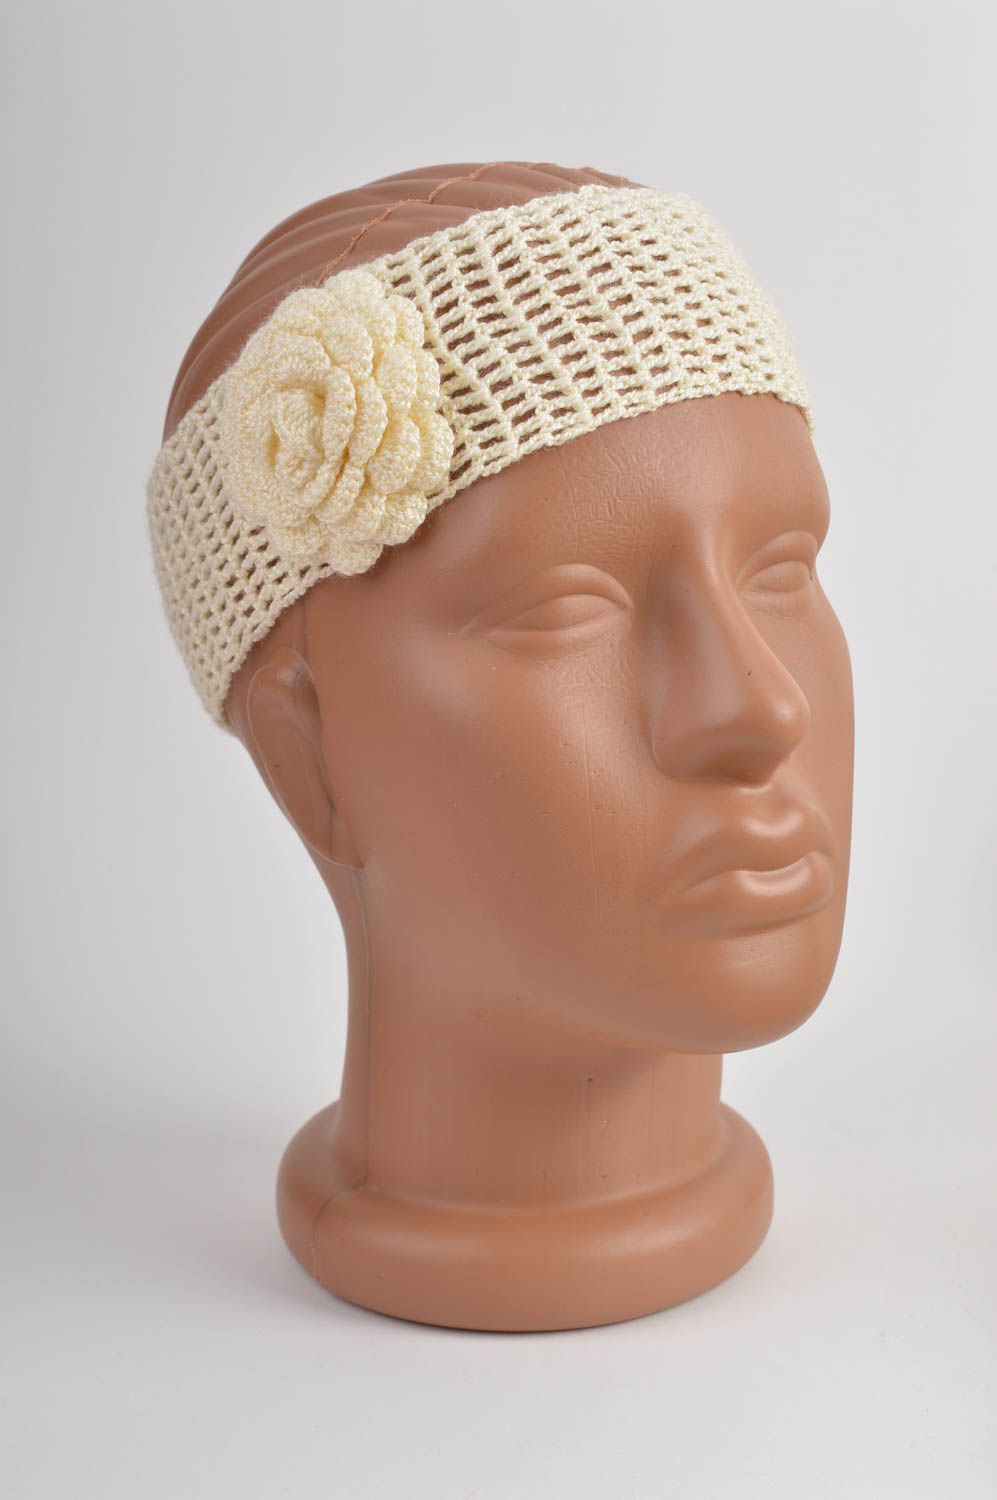 Handmade headband with flower cute accessories for kids designer headband photo 2